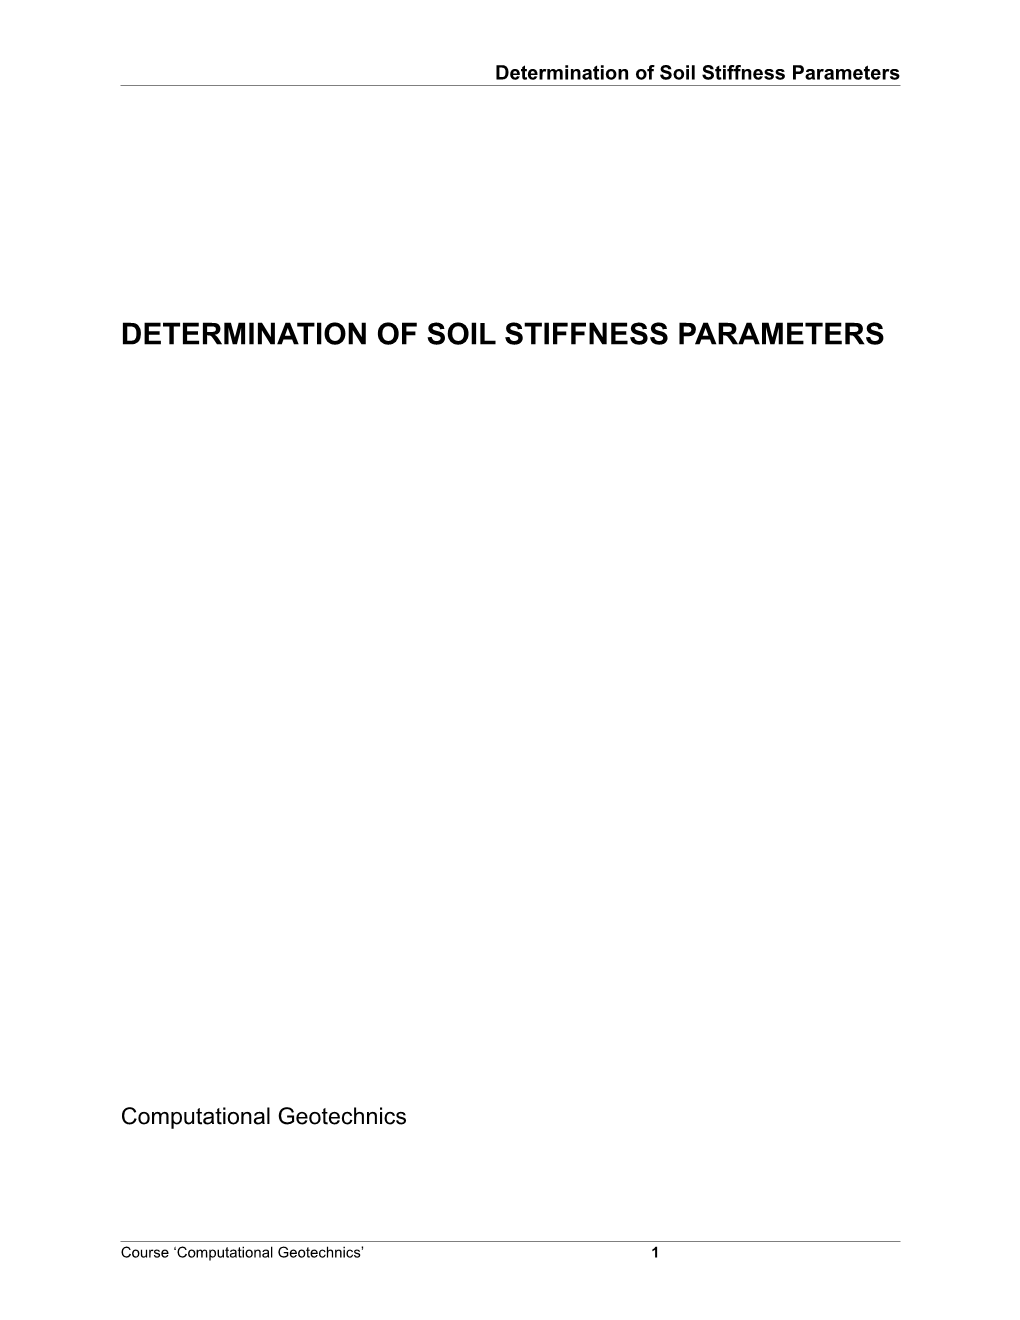 Determination of Soil Stiffness Parameters